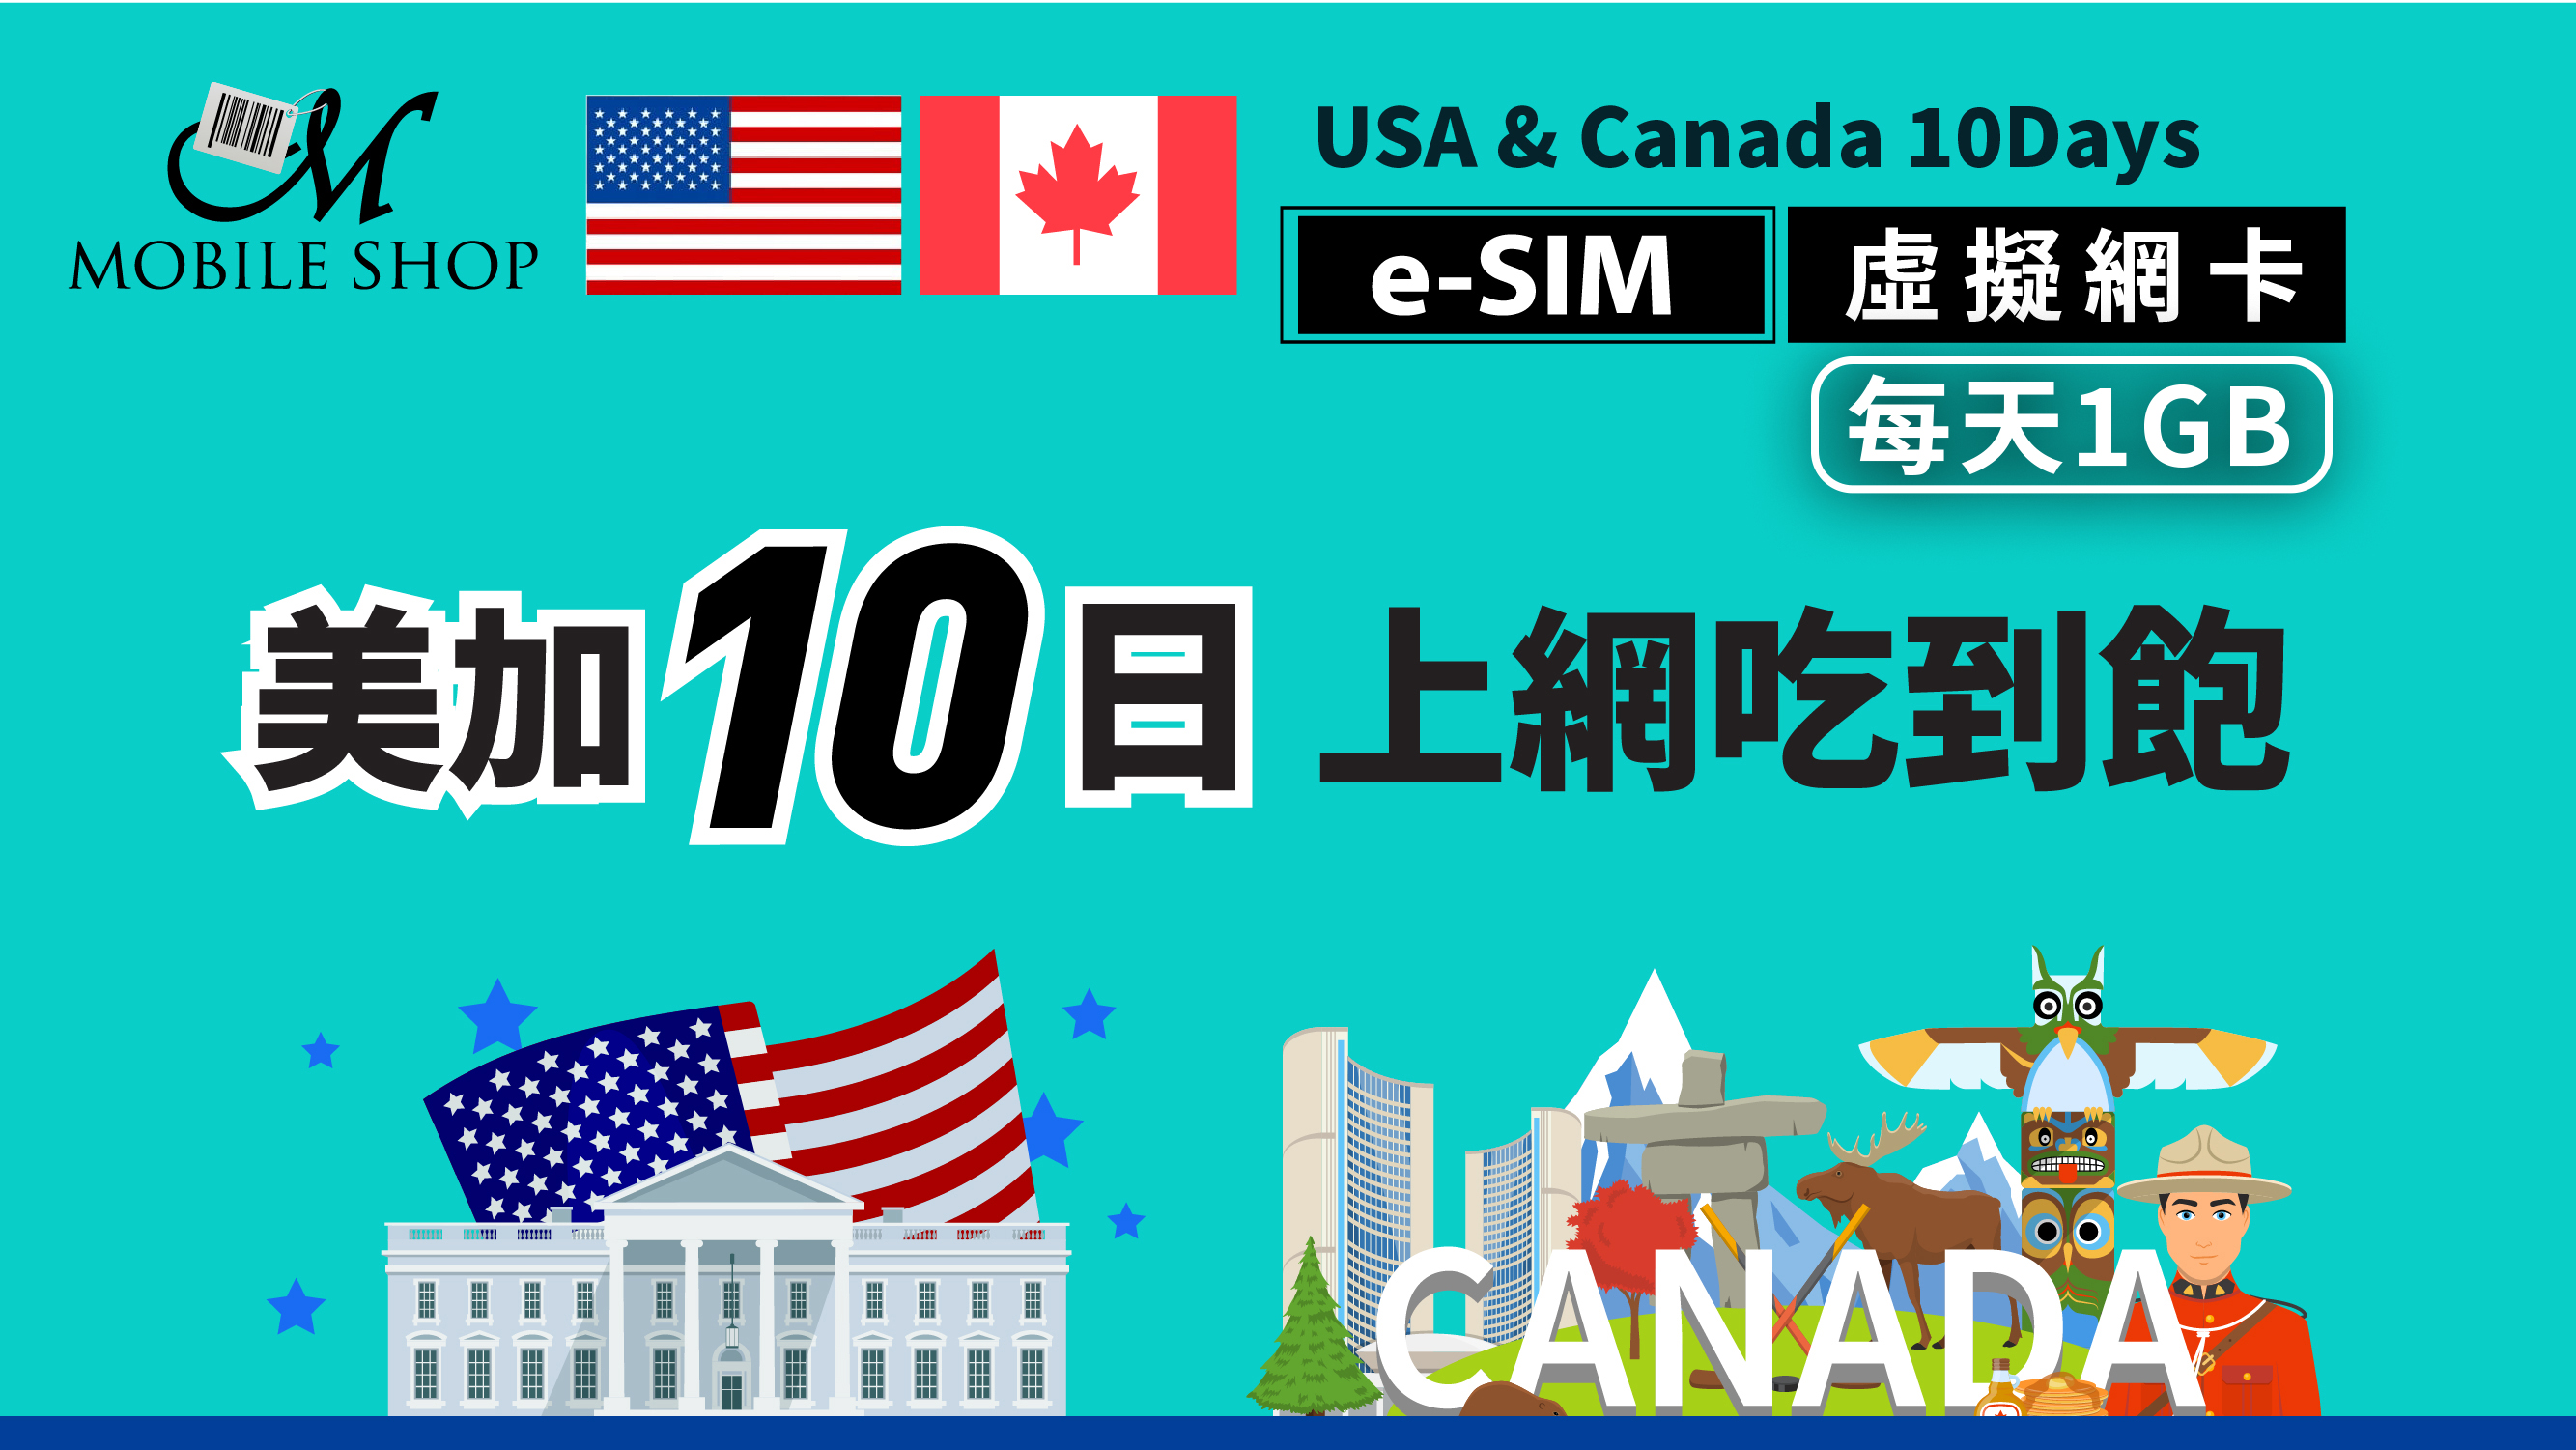 e-SIM_U.S./Canada 10 days/1GB per day unlimited data